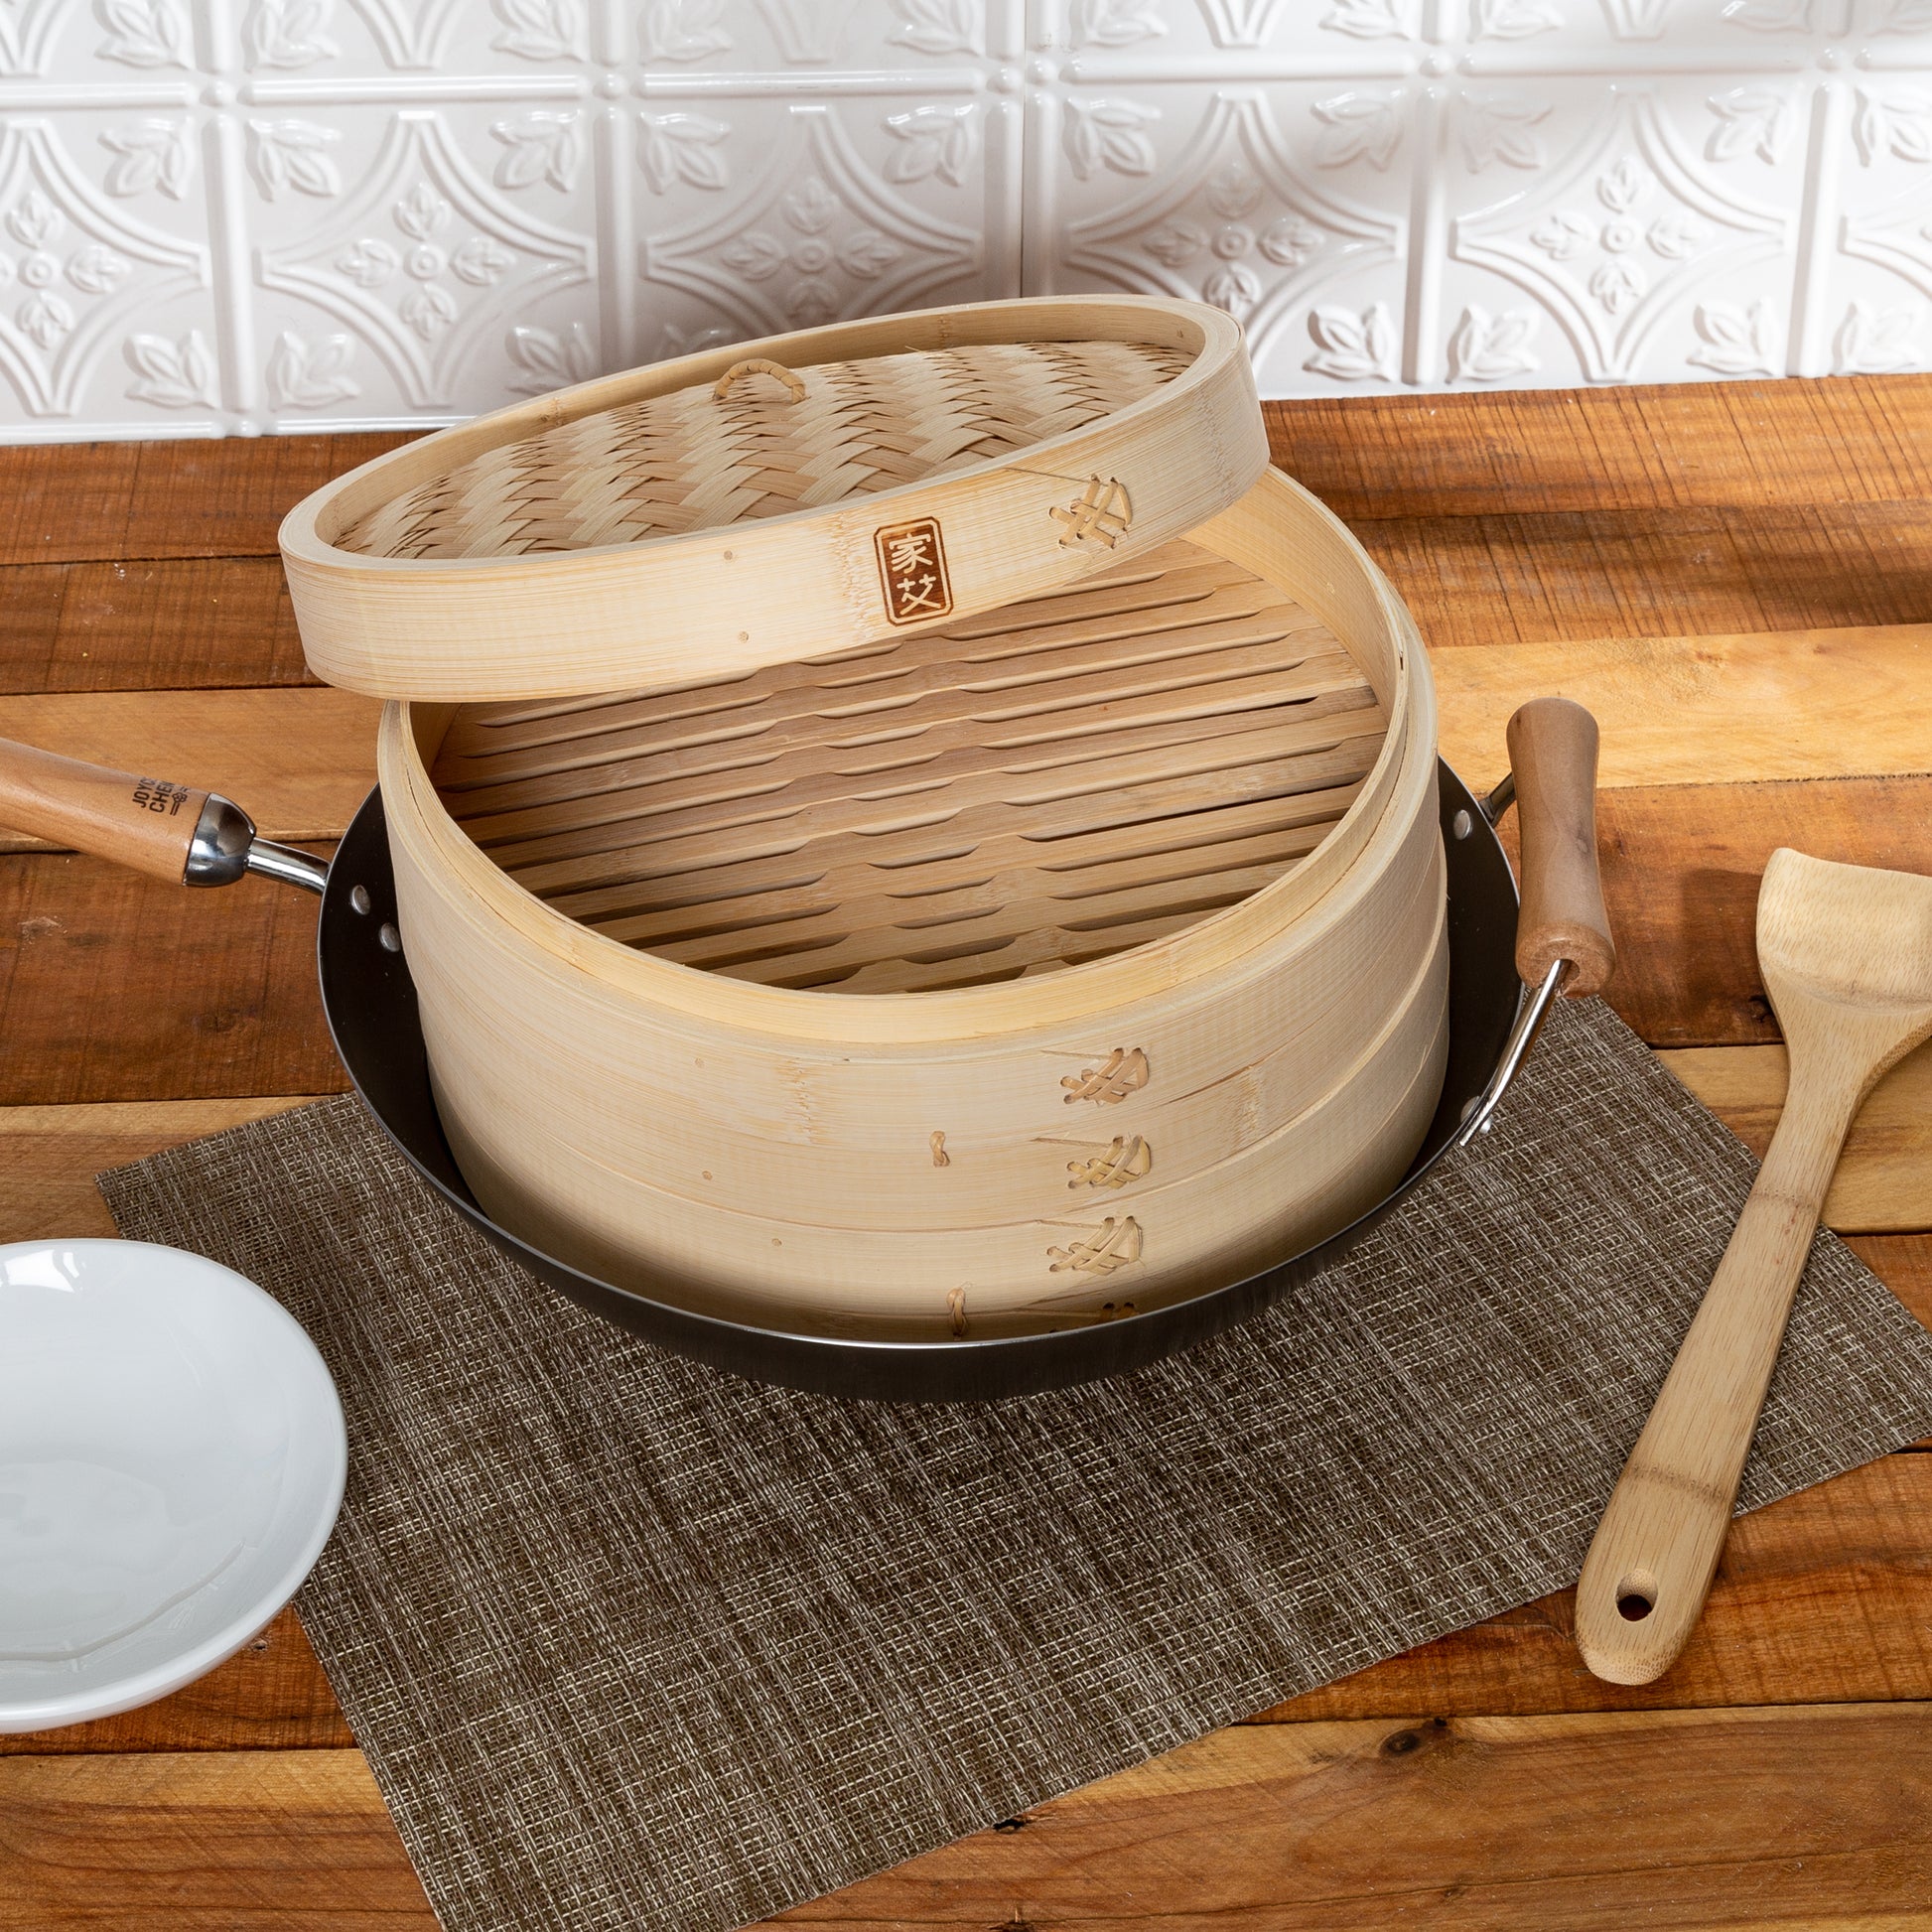  POPGRADE Steamer Basket for Cooking, 2 Size Set of